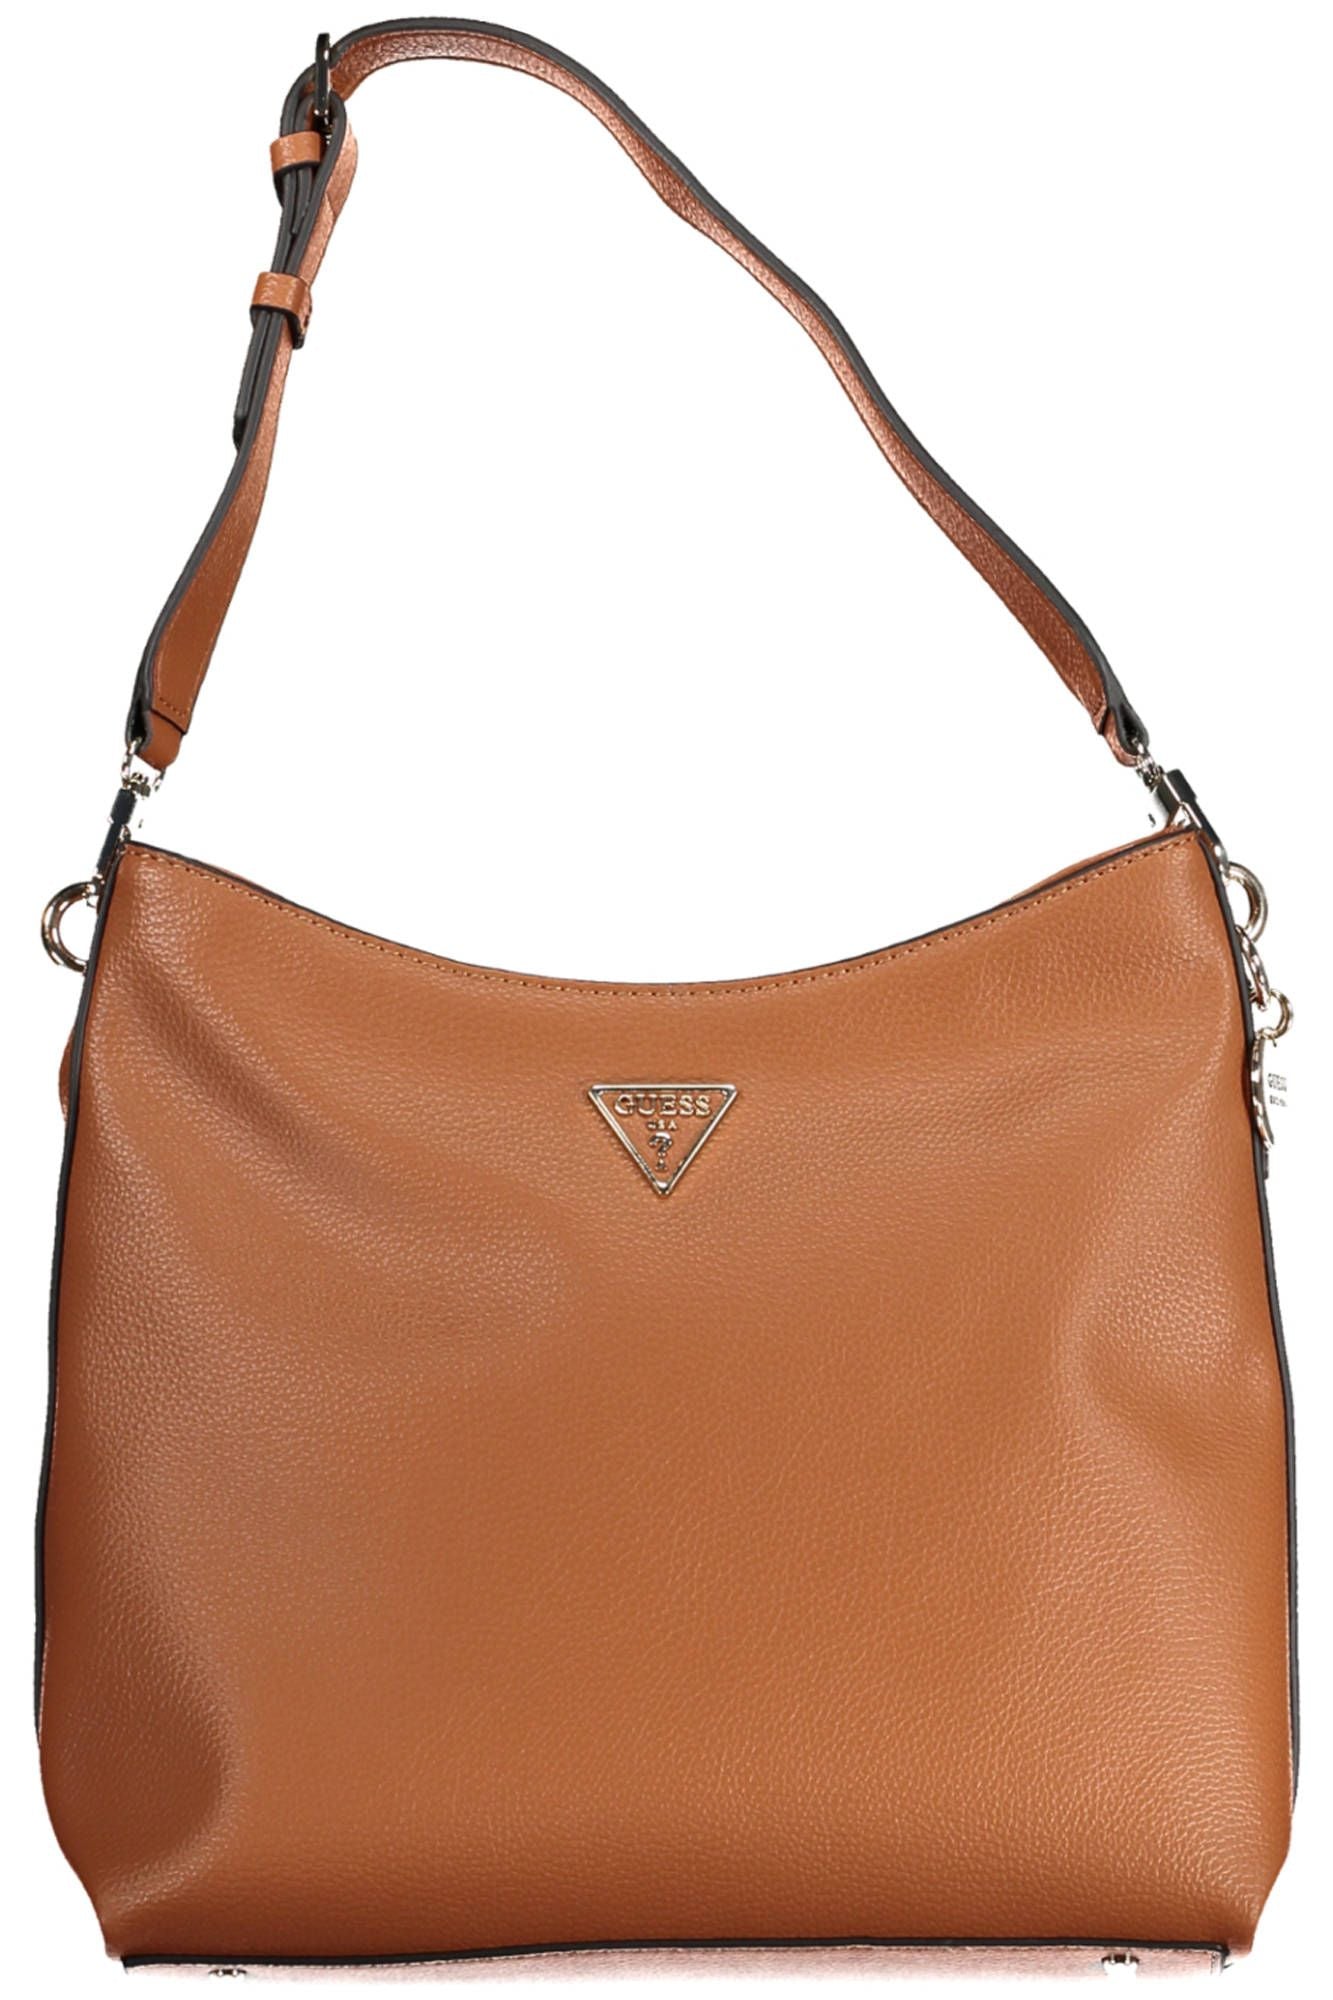 Chic Brown Shoulder Bag with Logo Detail